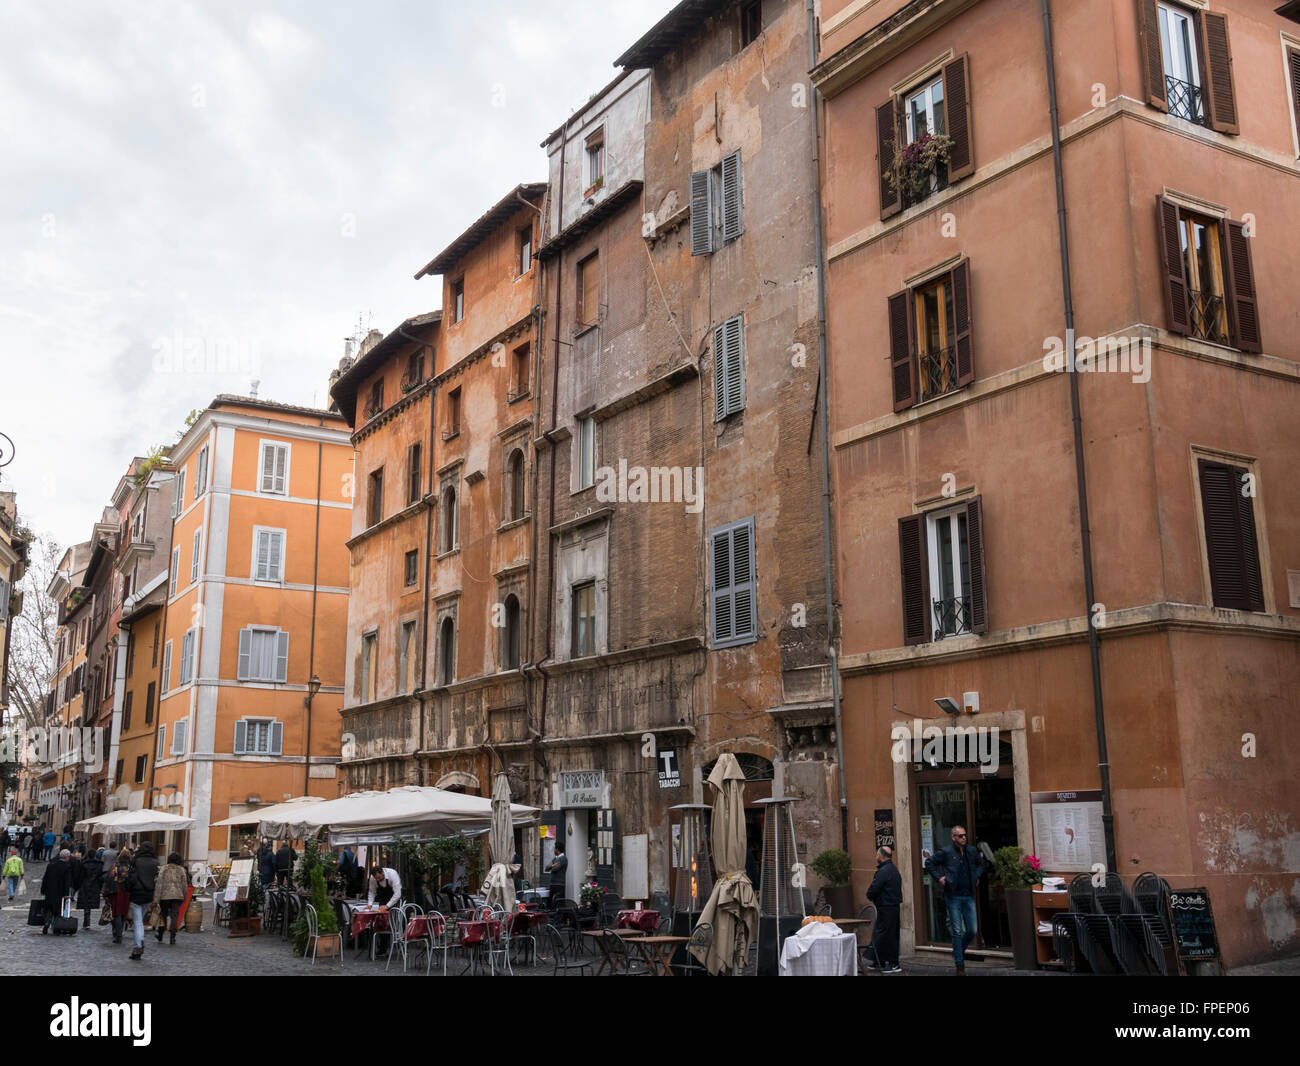 The Jewish Ghetto, Trastevere district, Rome, Italy Stock Photo - Alamy